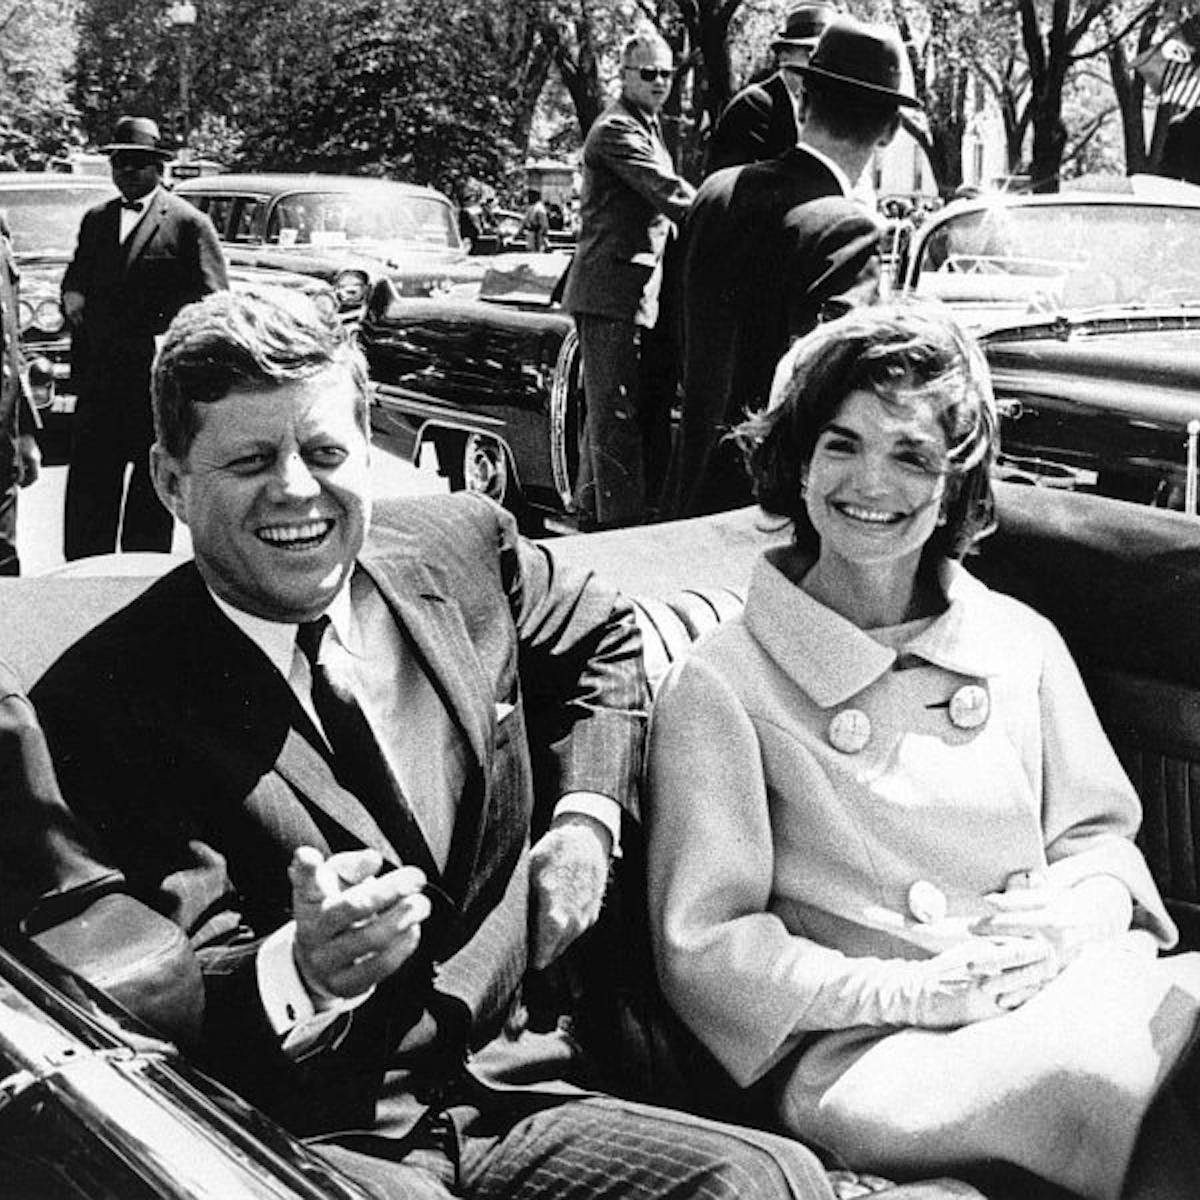 Kennedy john f. Kennedy’s Policies